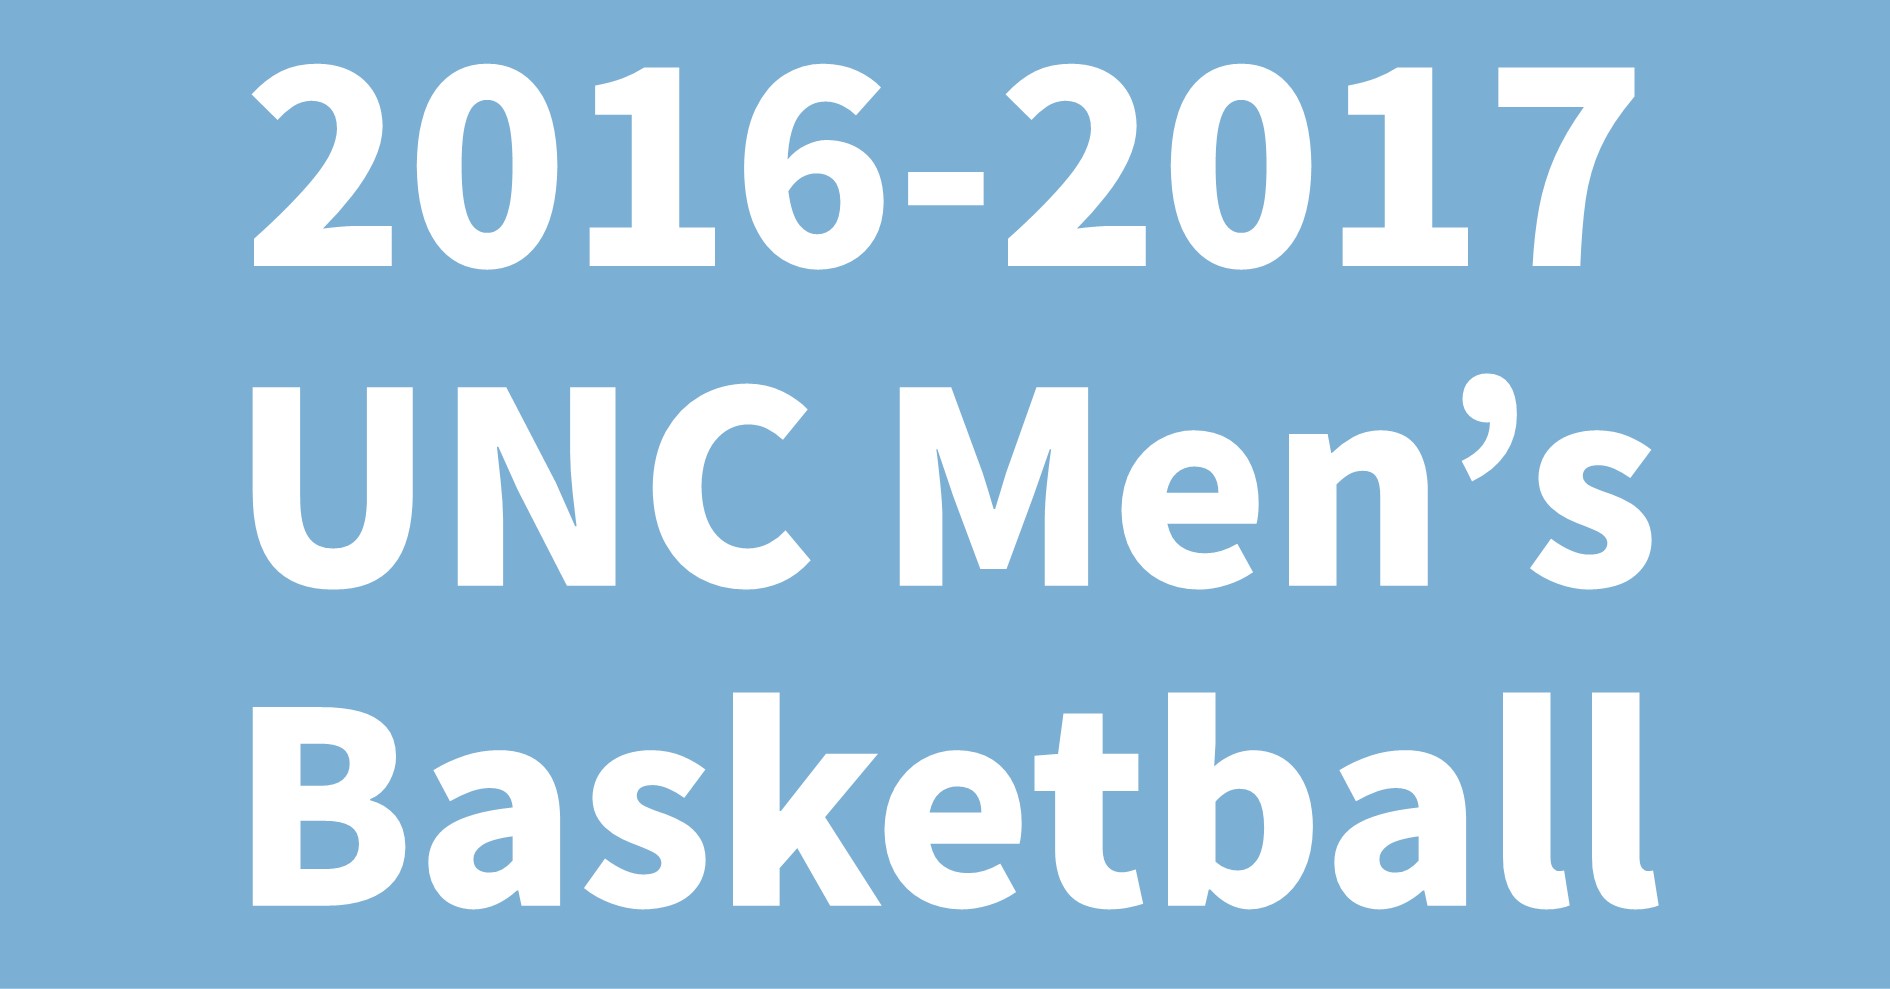 2016-2017 UNC Men's Basketball